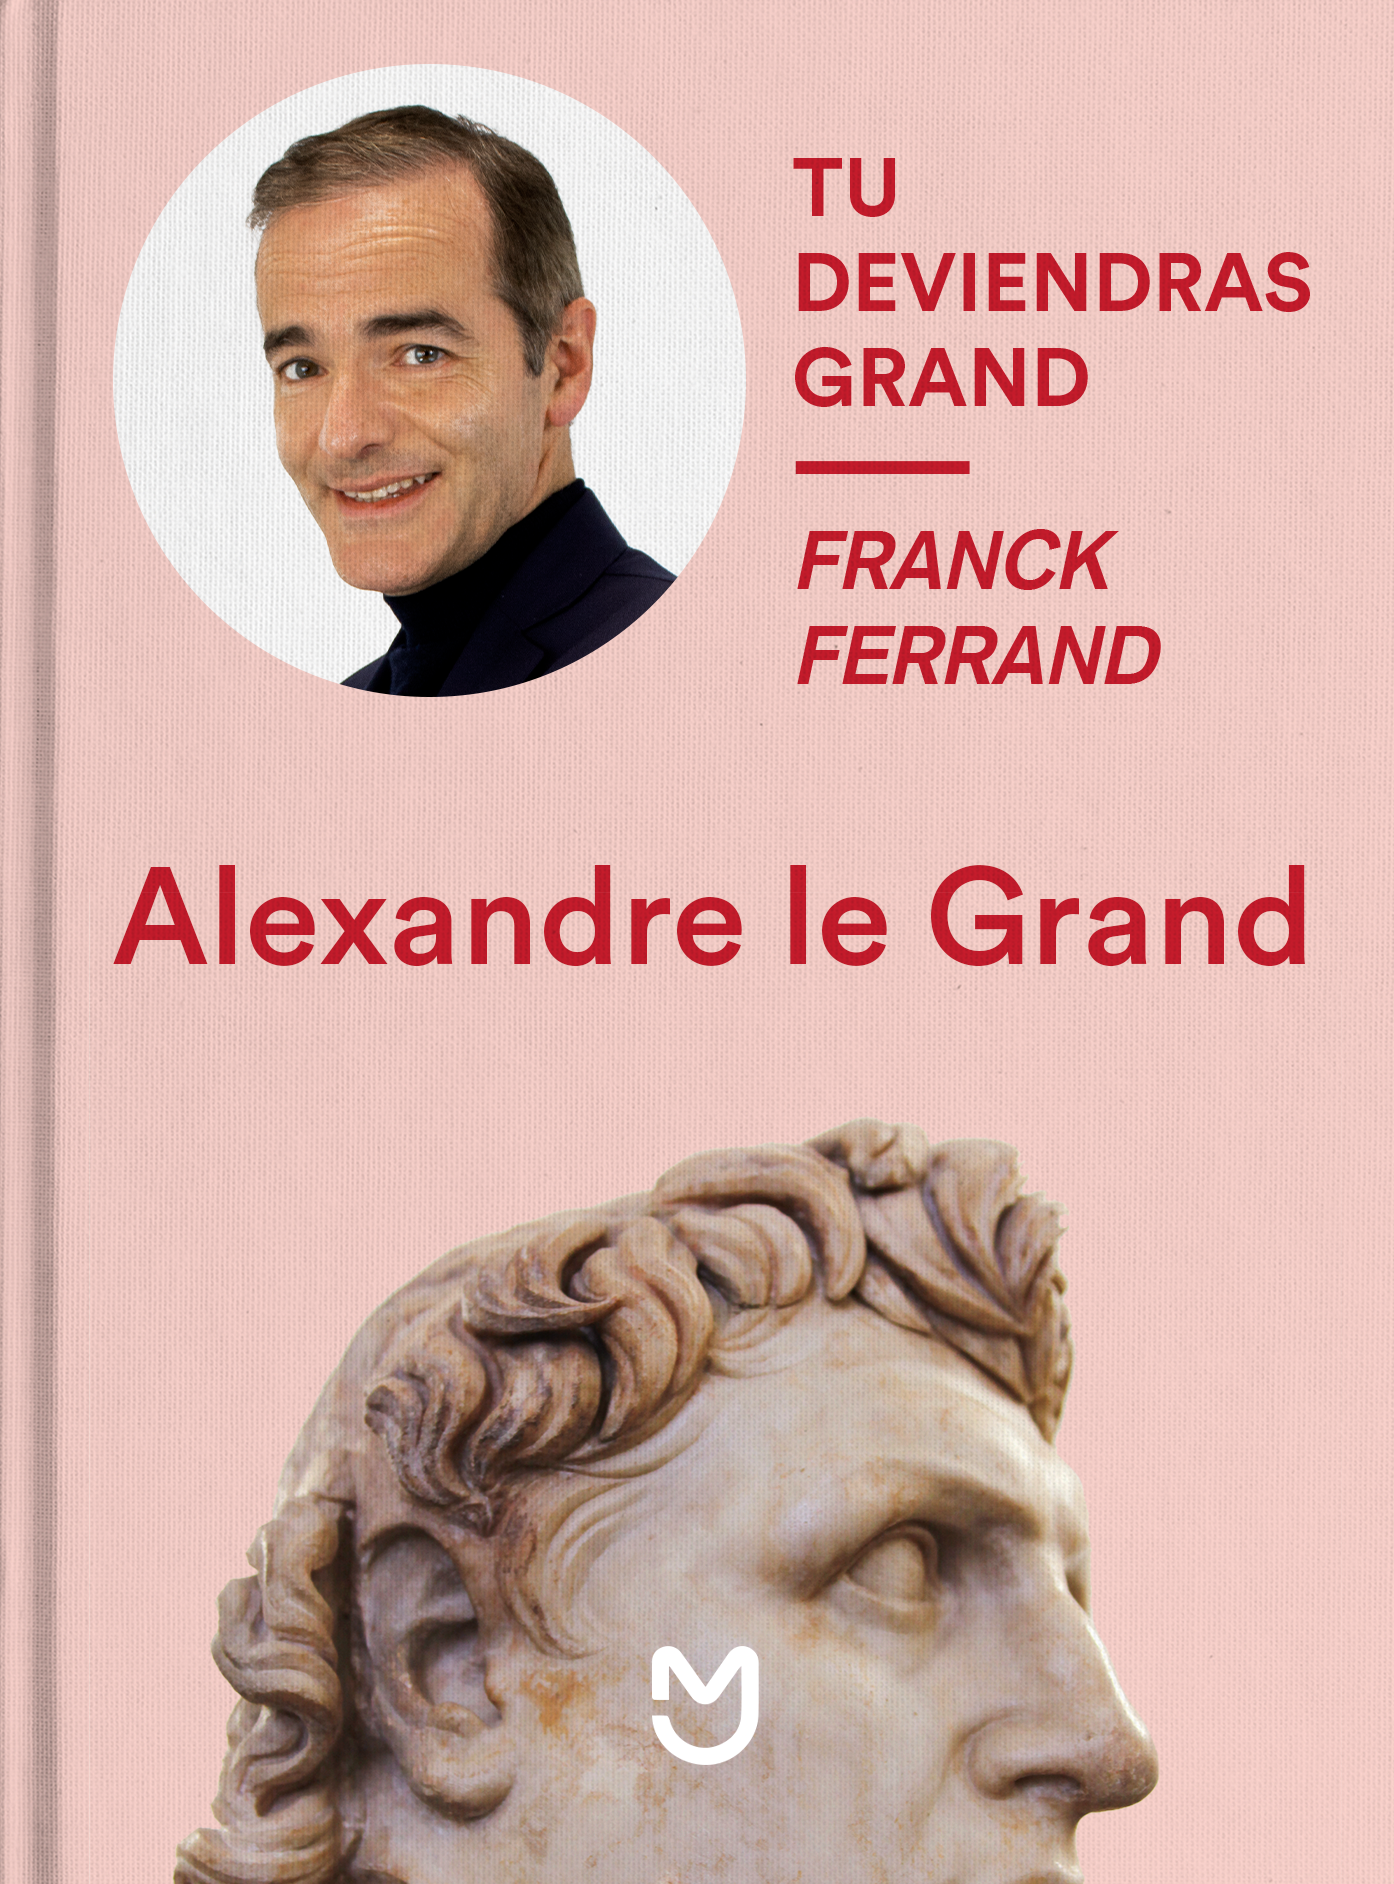 Franck Ferrand, Alexandre le Grand